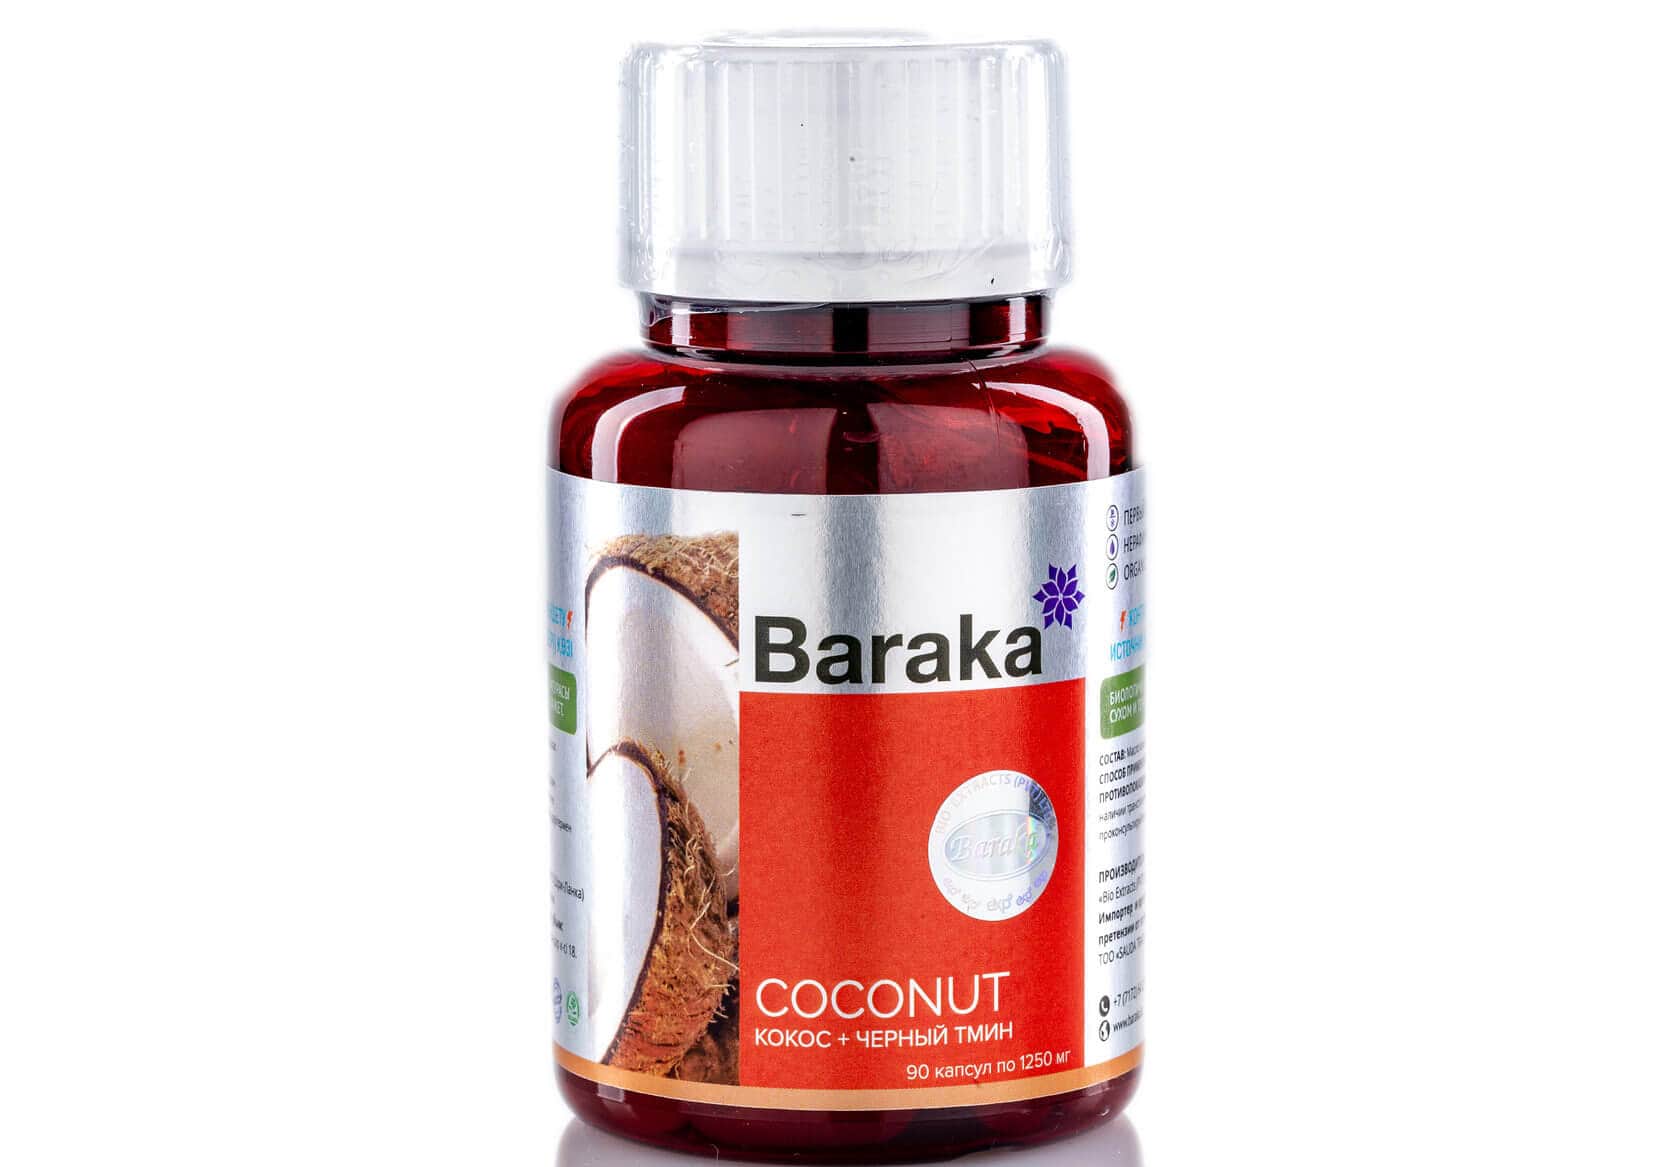 Baraka Масло кокоса + Черный тмин 1250 мг, 90 капсул